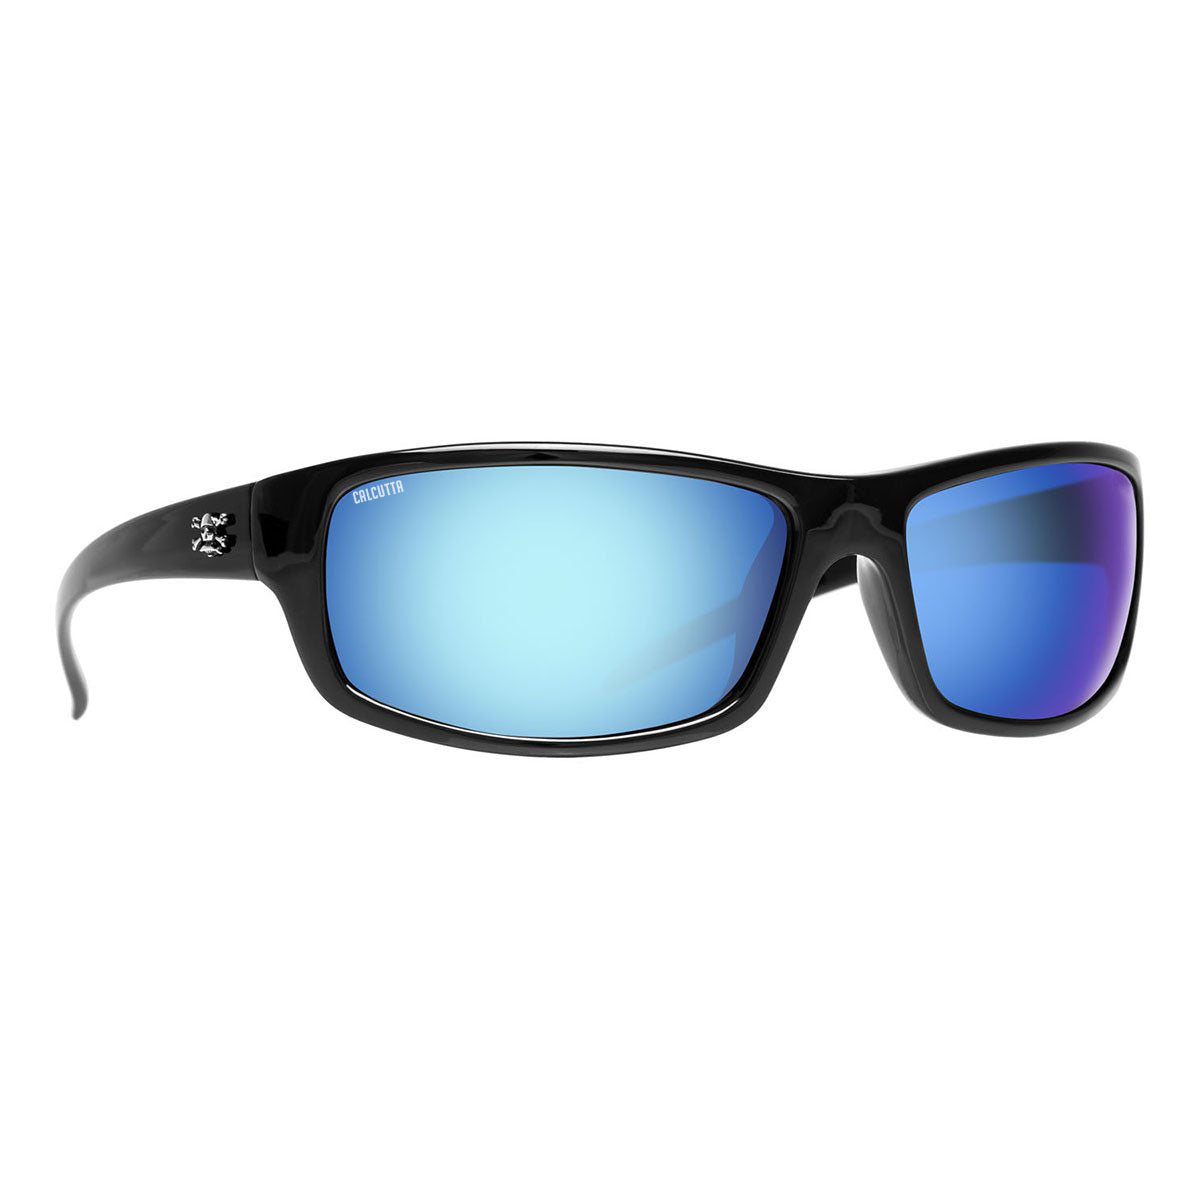 Calcutta Meads sunglasses black frame blue lens